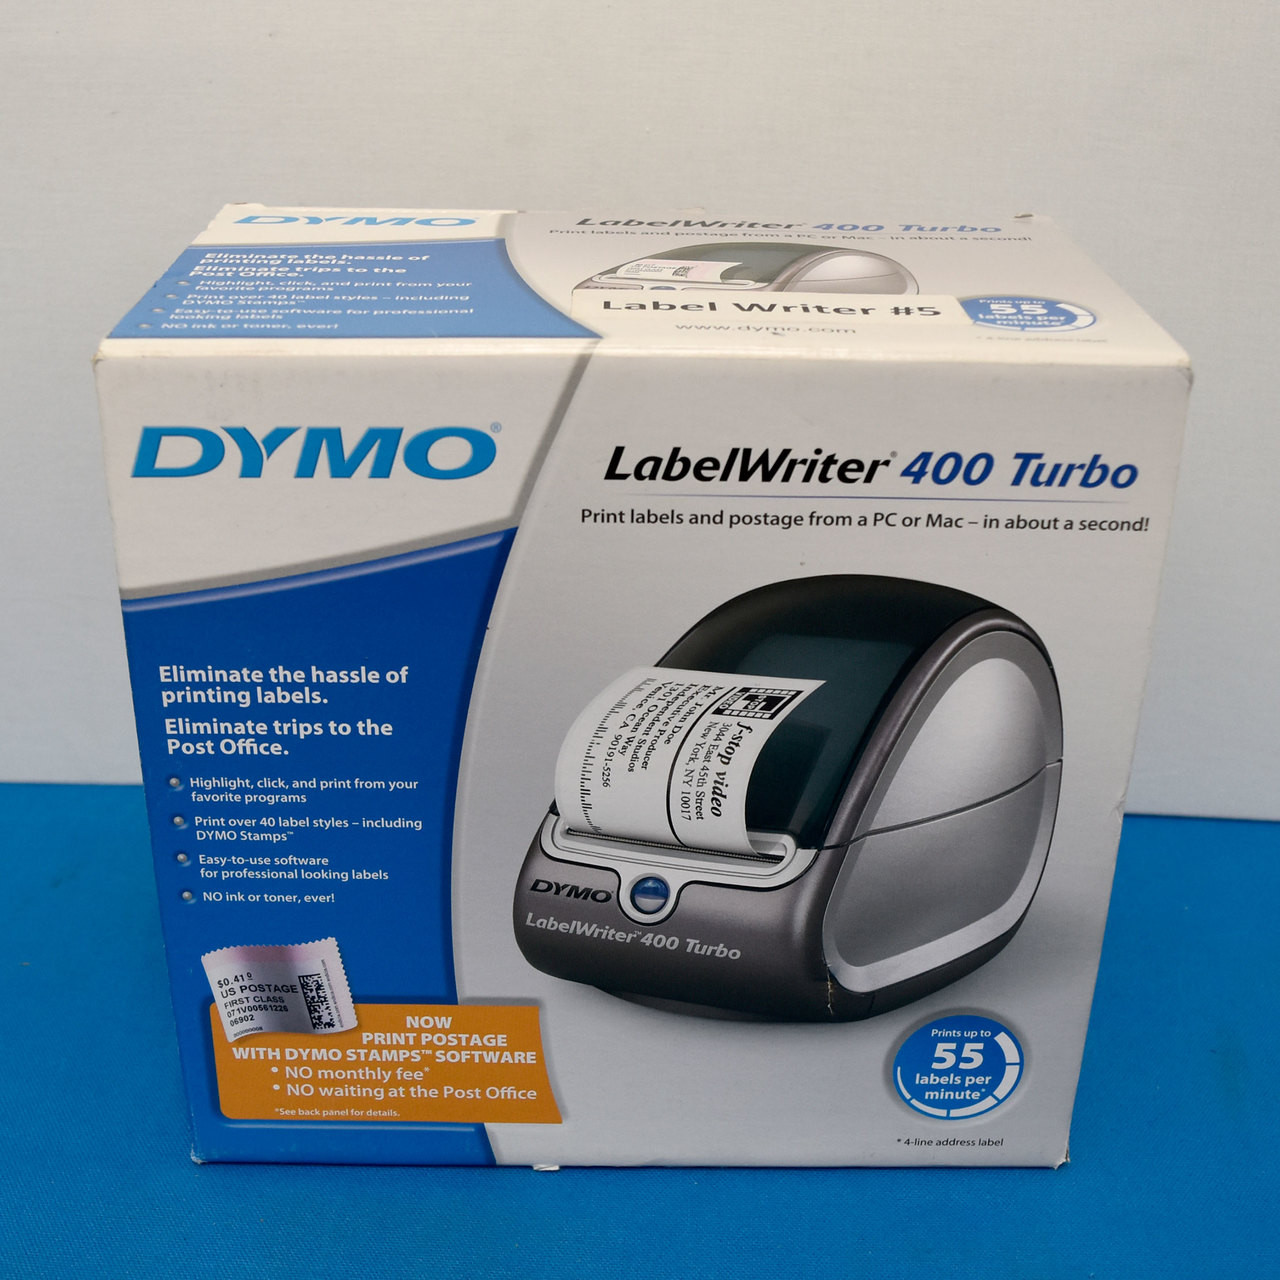 Message d'erreur imprimante DYMO LabelWriter 400 - Microsoft Community